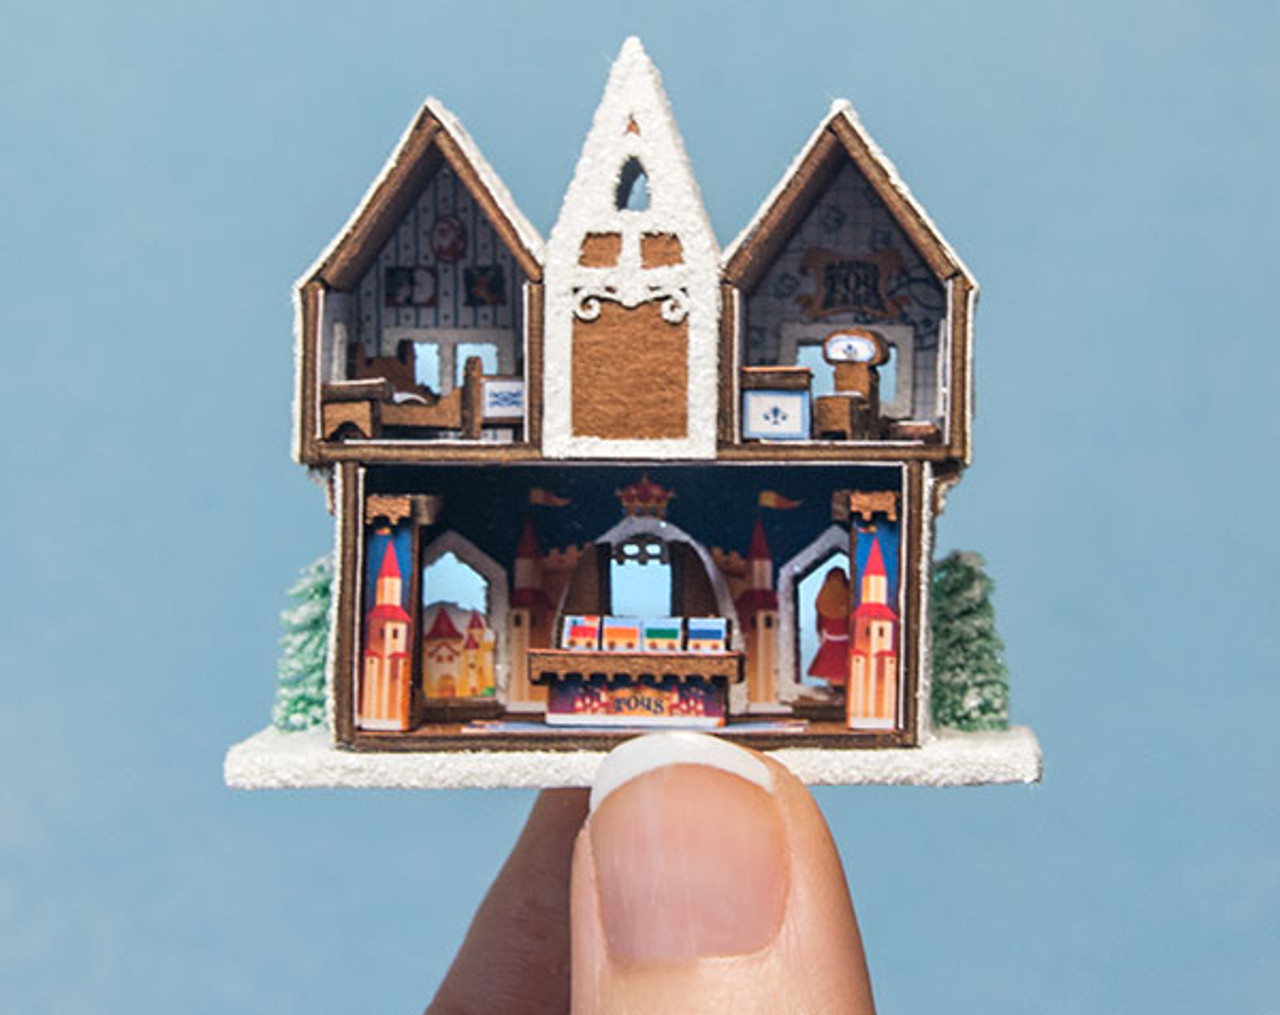 Micro Gingerbread Gift Shop Kit